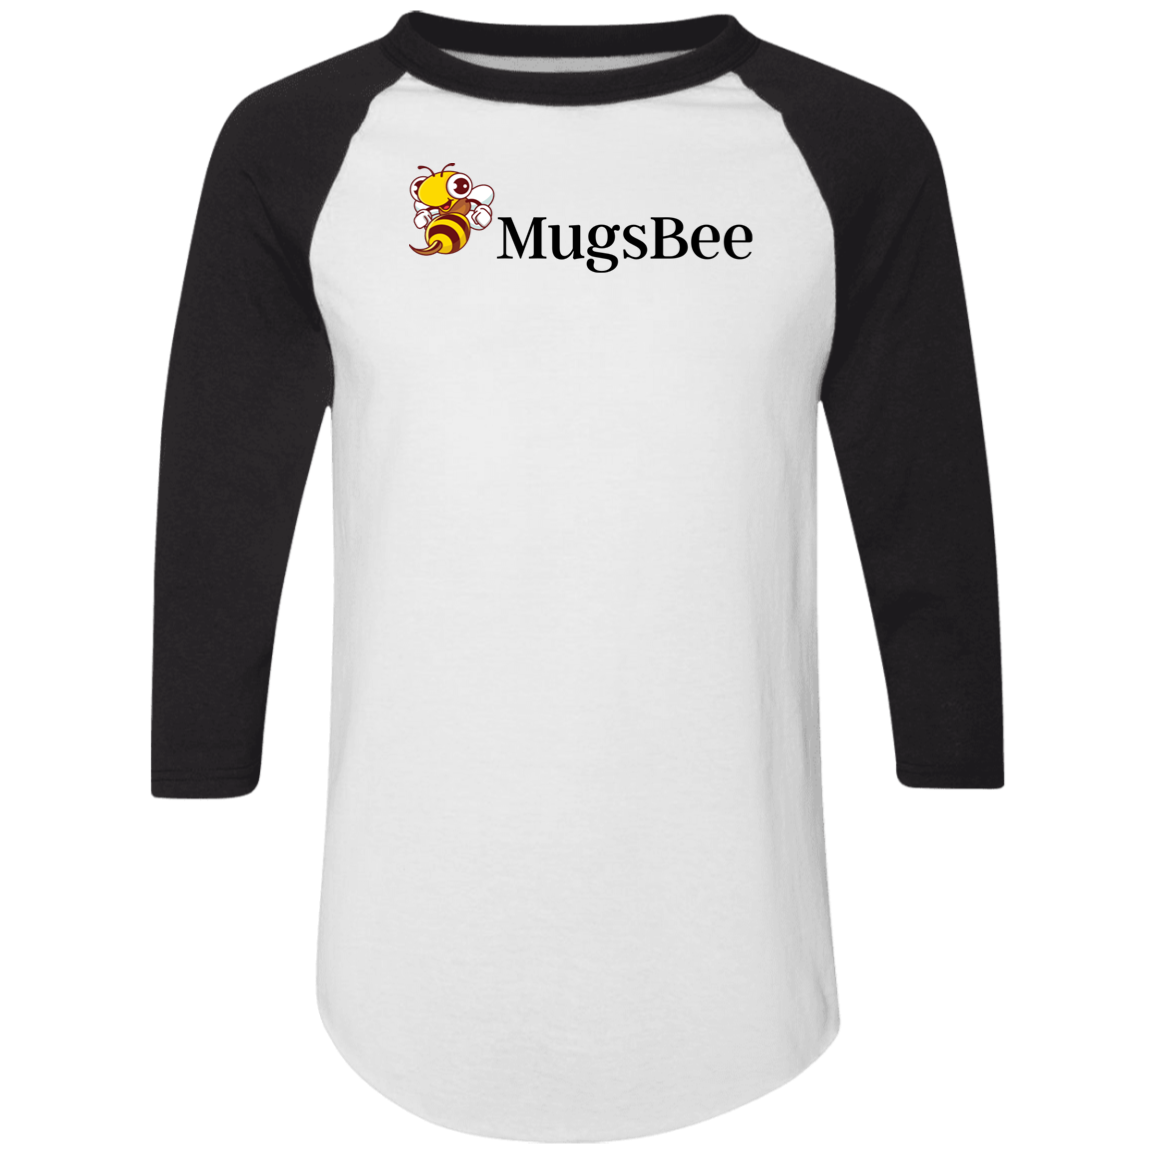 Men's Colorblock Raglan Jersey - Classic MugsBee Logo